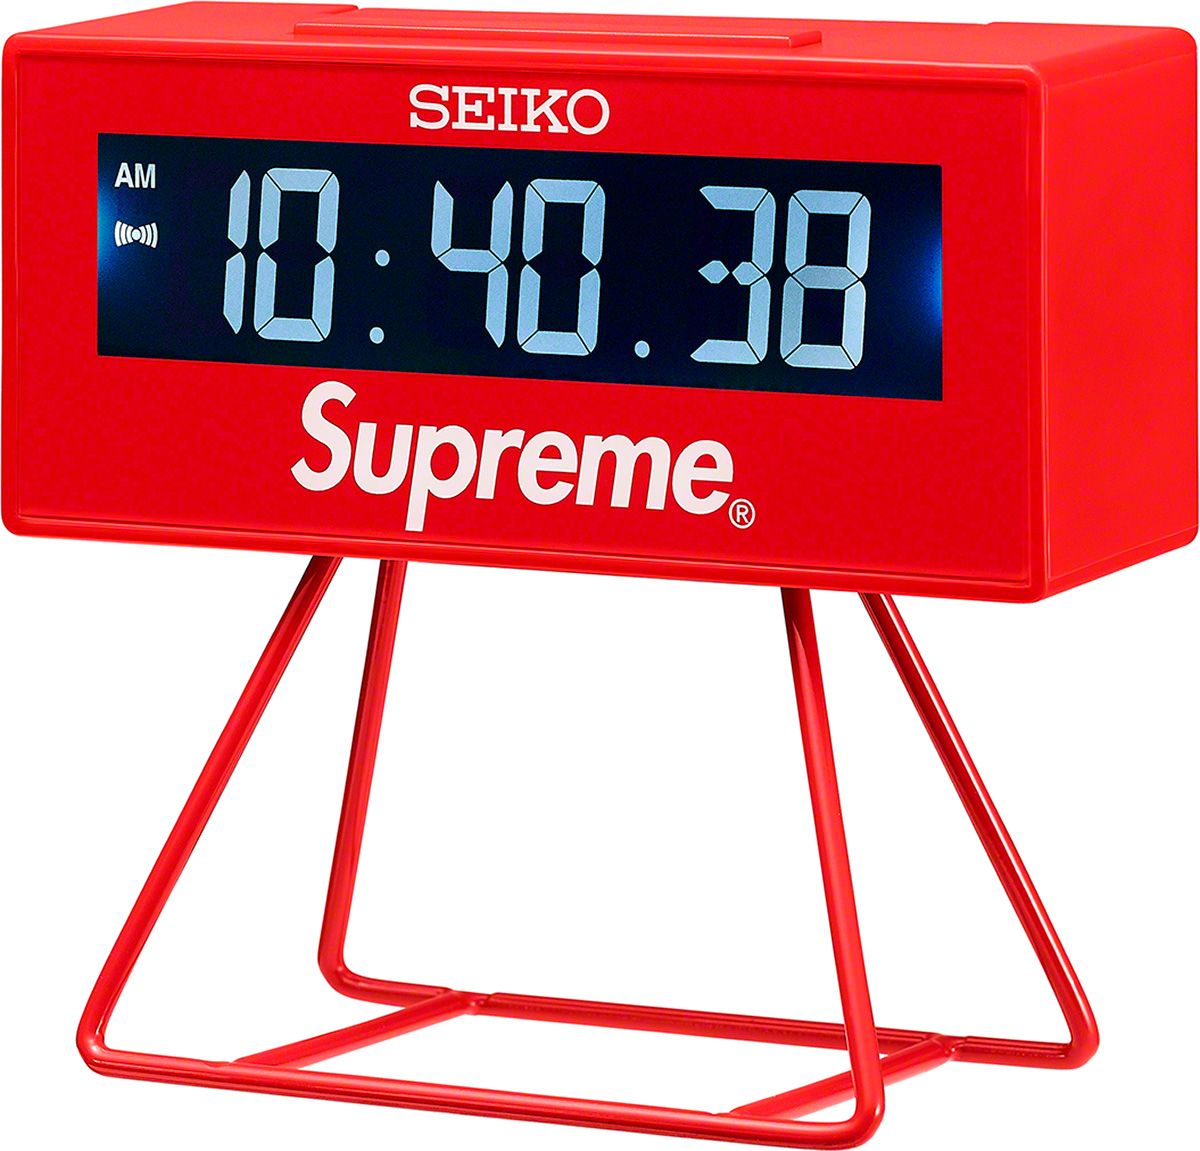 Supreme®/Seiko Marathon Clock - Spring/Summer 2021 Preview – Supreme